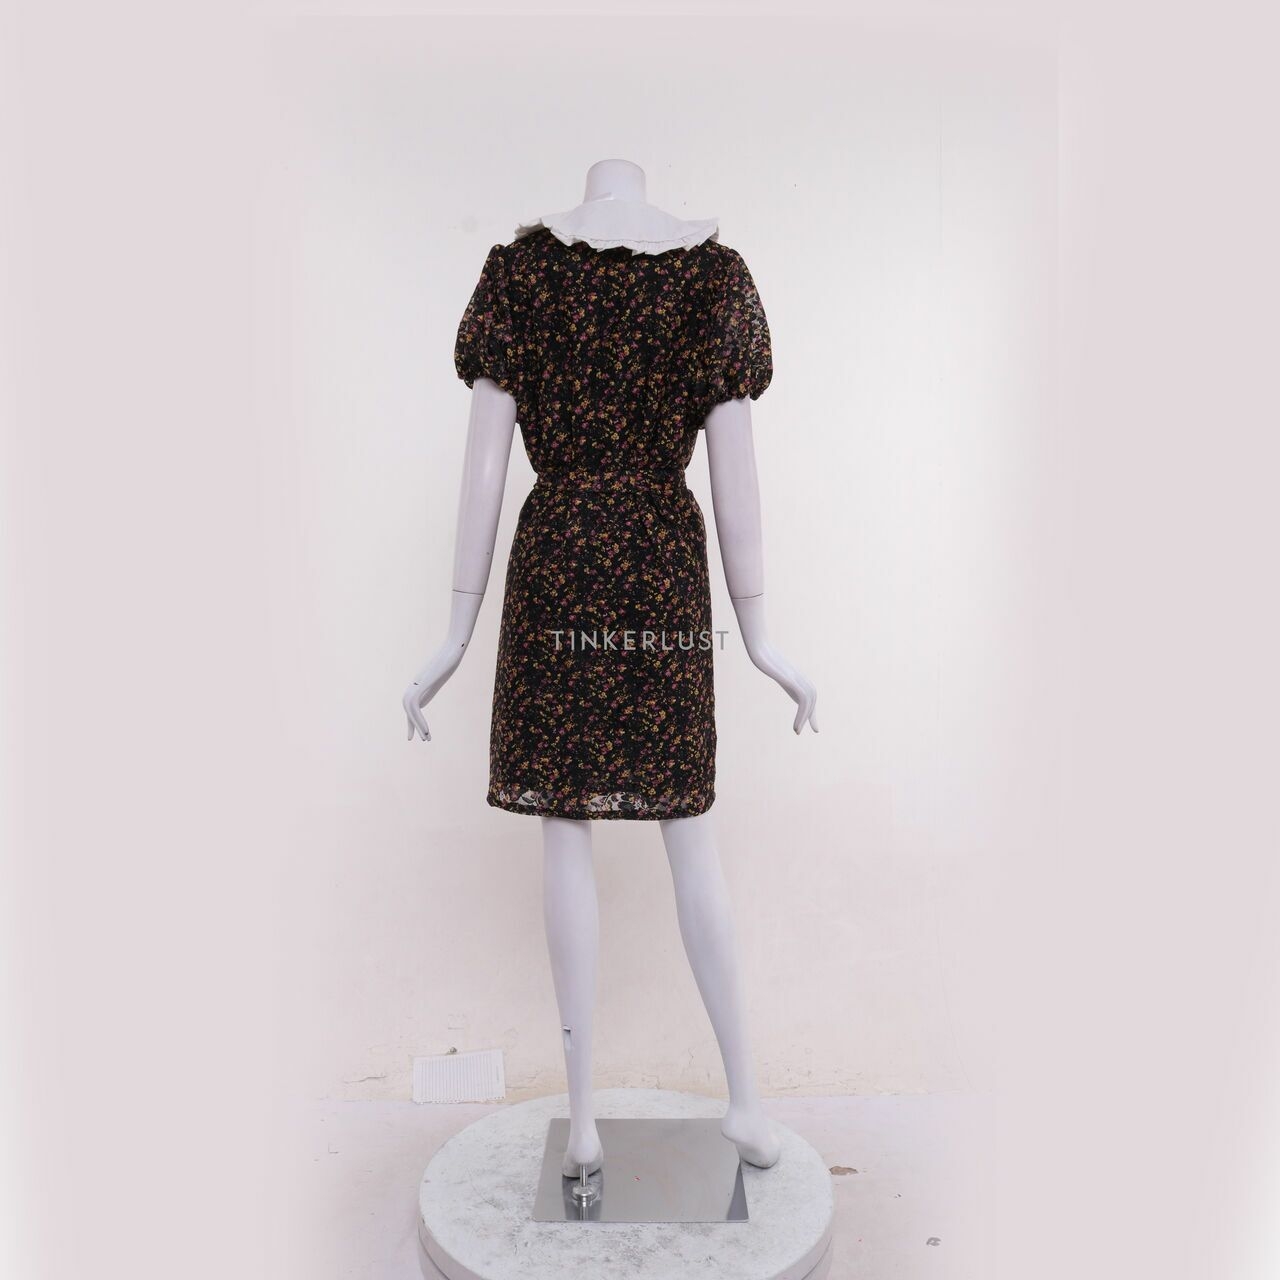 Claire Cynthia Tan Multi Mini Dress